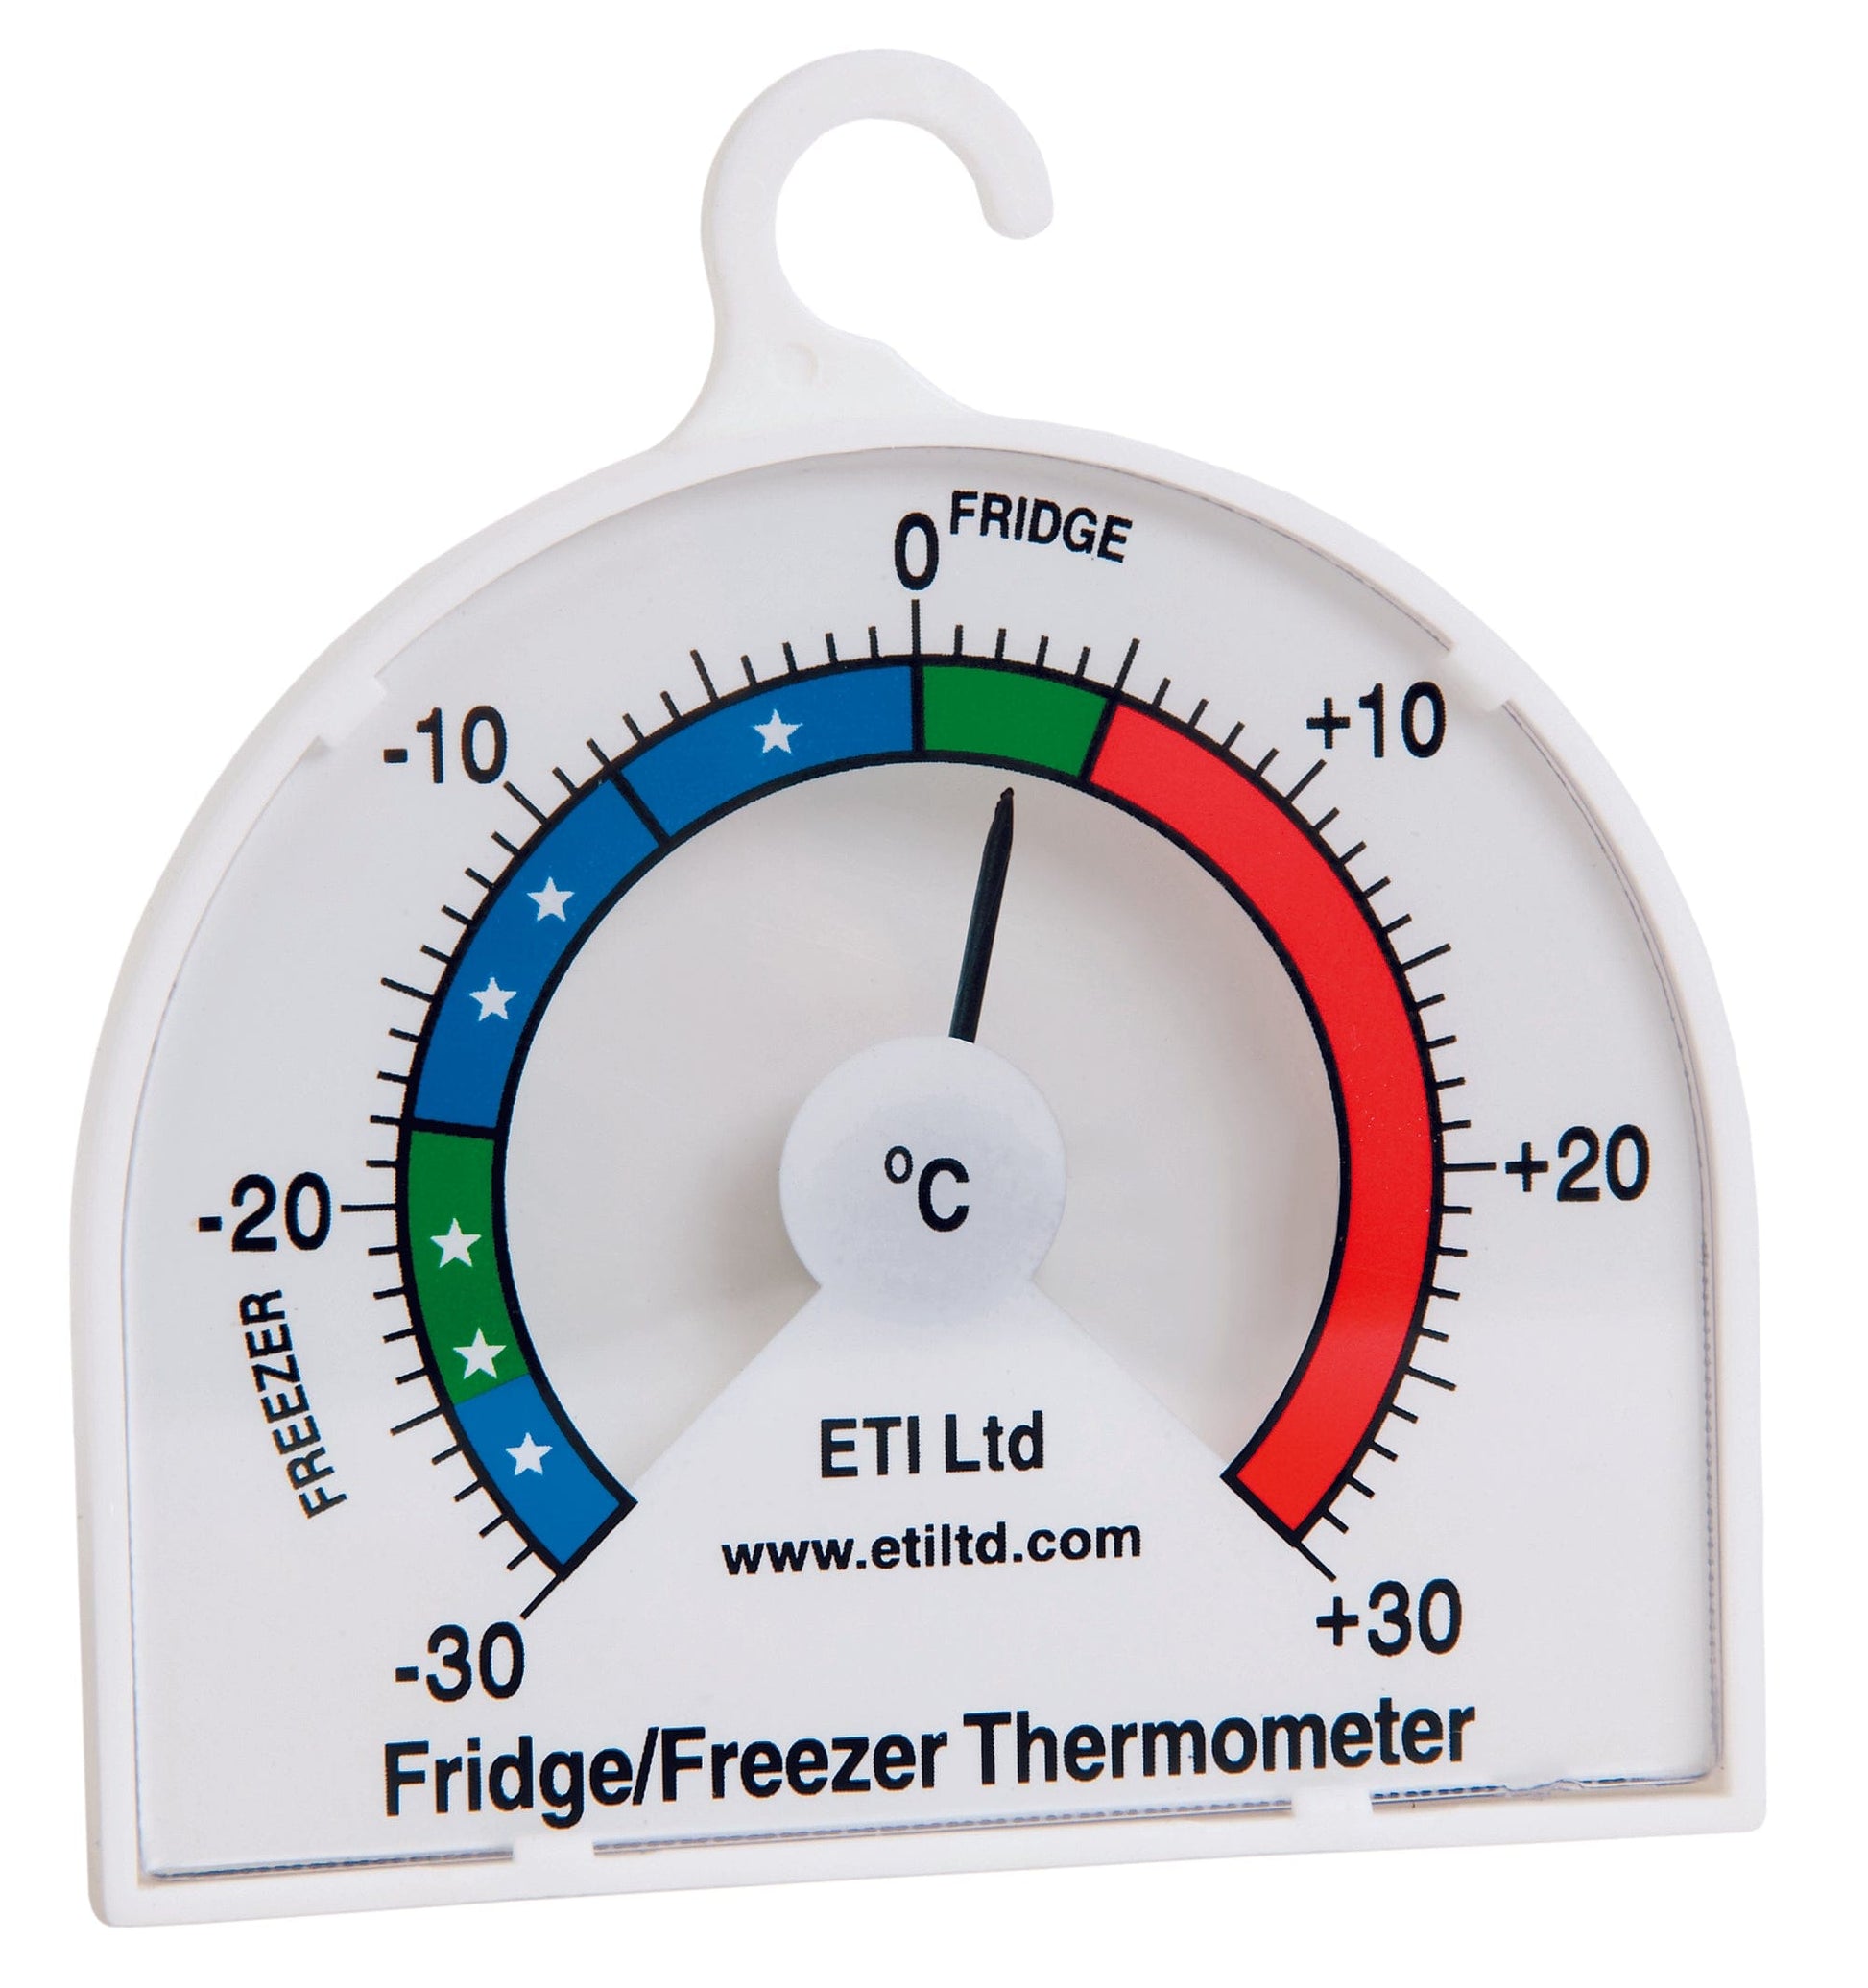 Thermometre.fr thermomètre frigo congélateur.